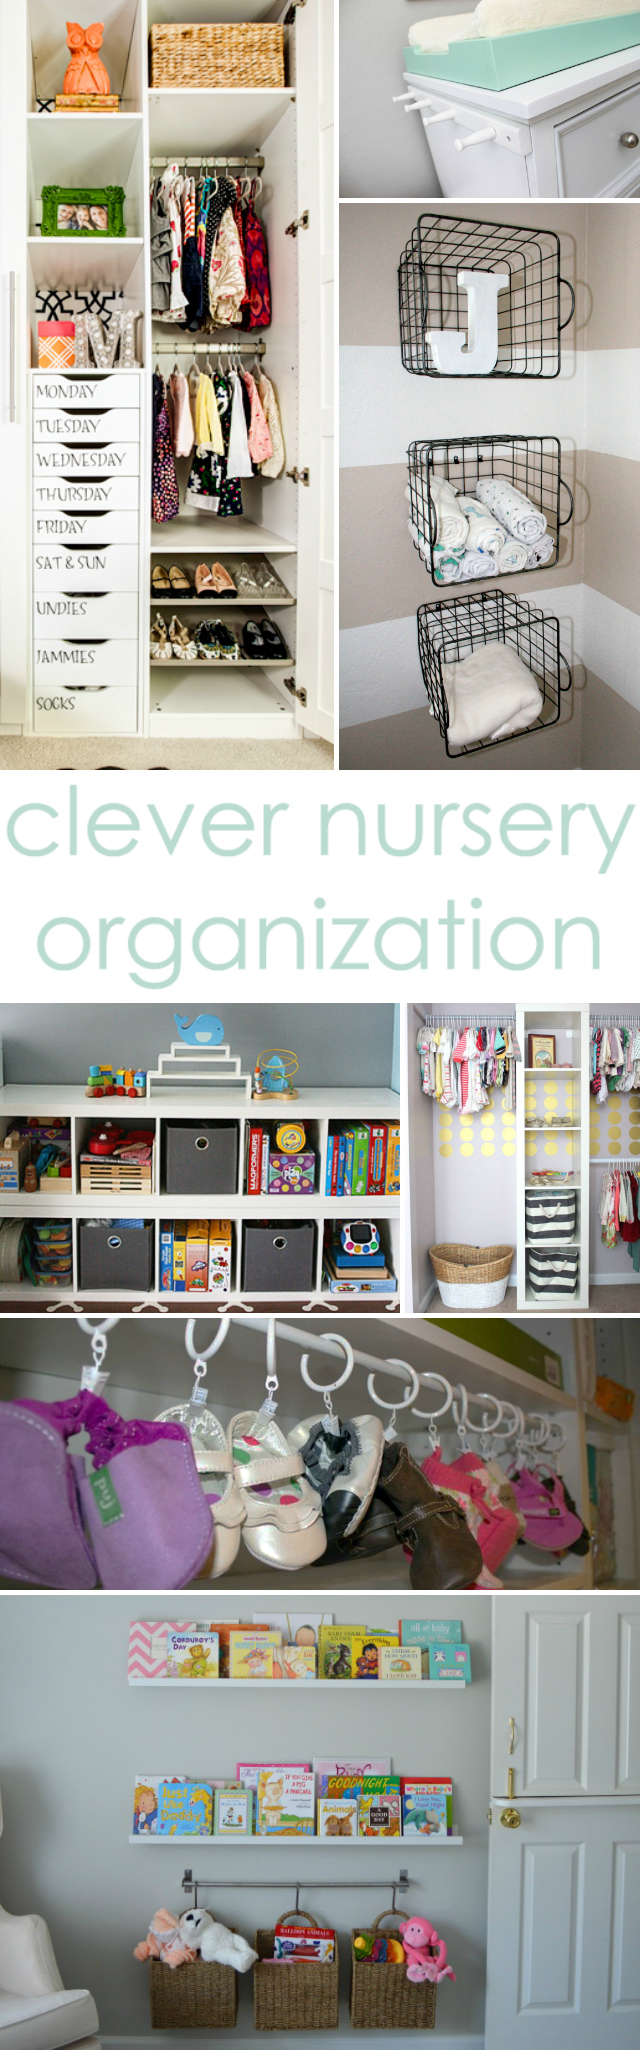 nursery organisation ideas